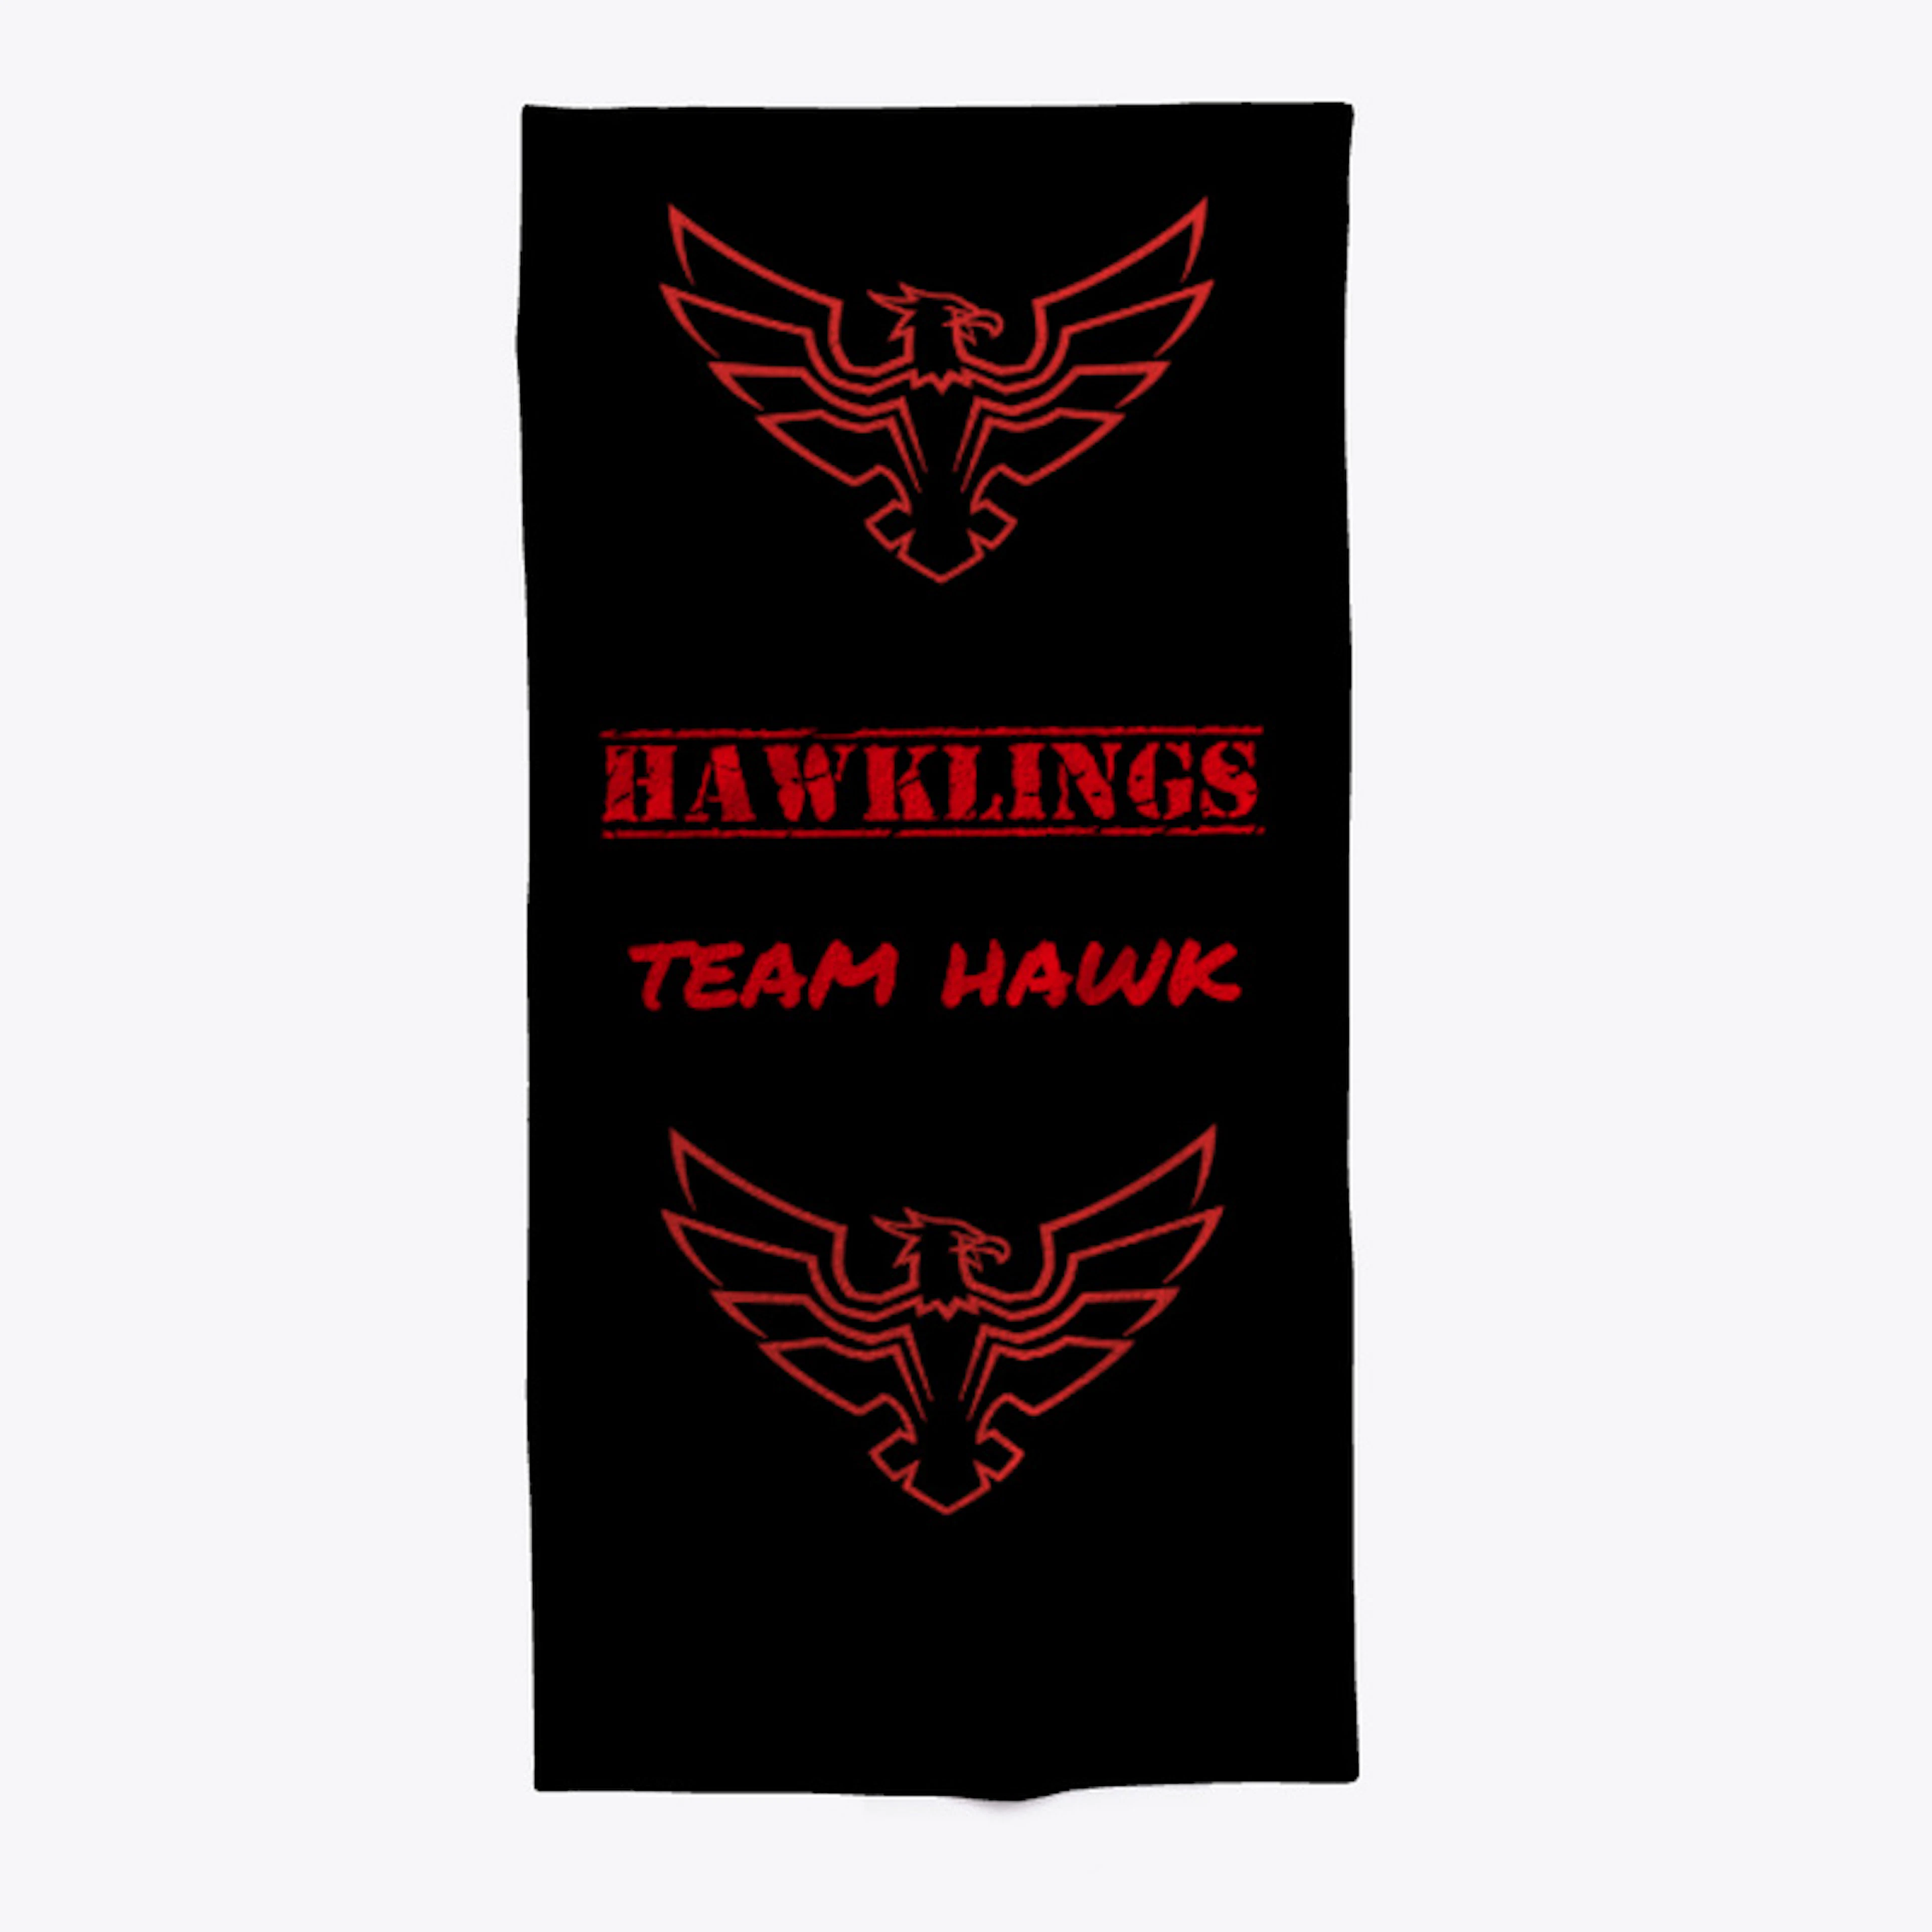 Hawklings Beach Towel